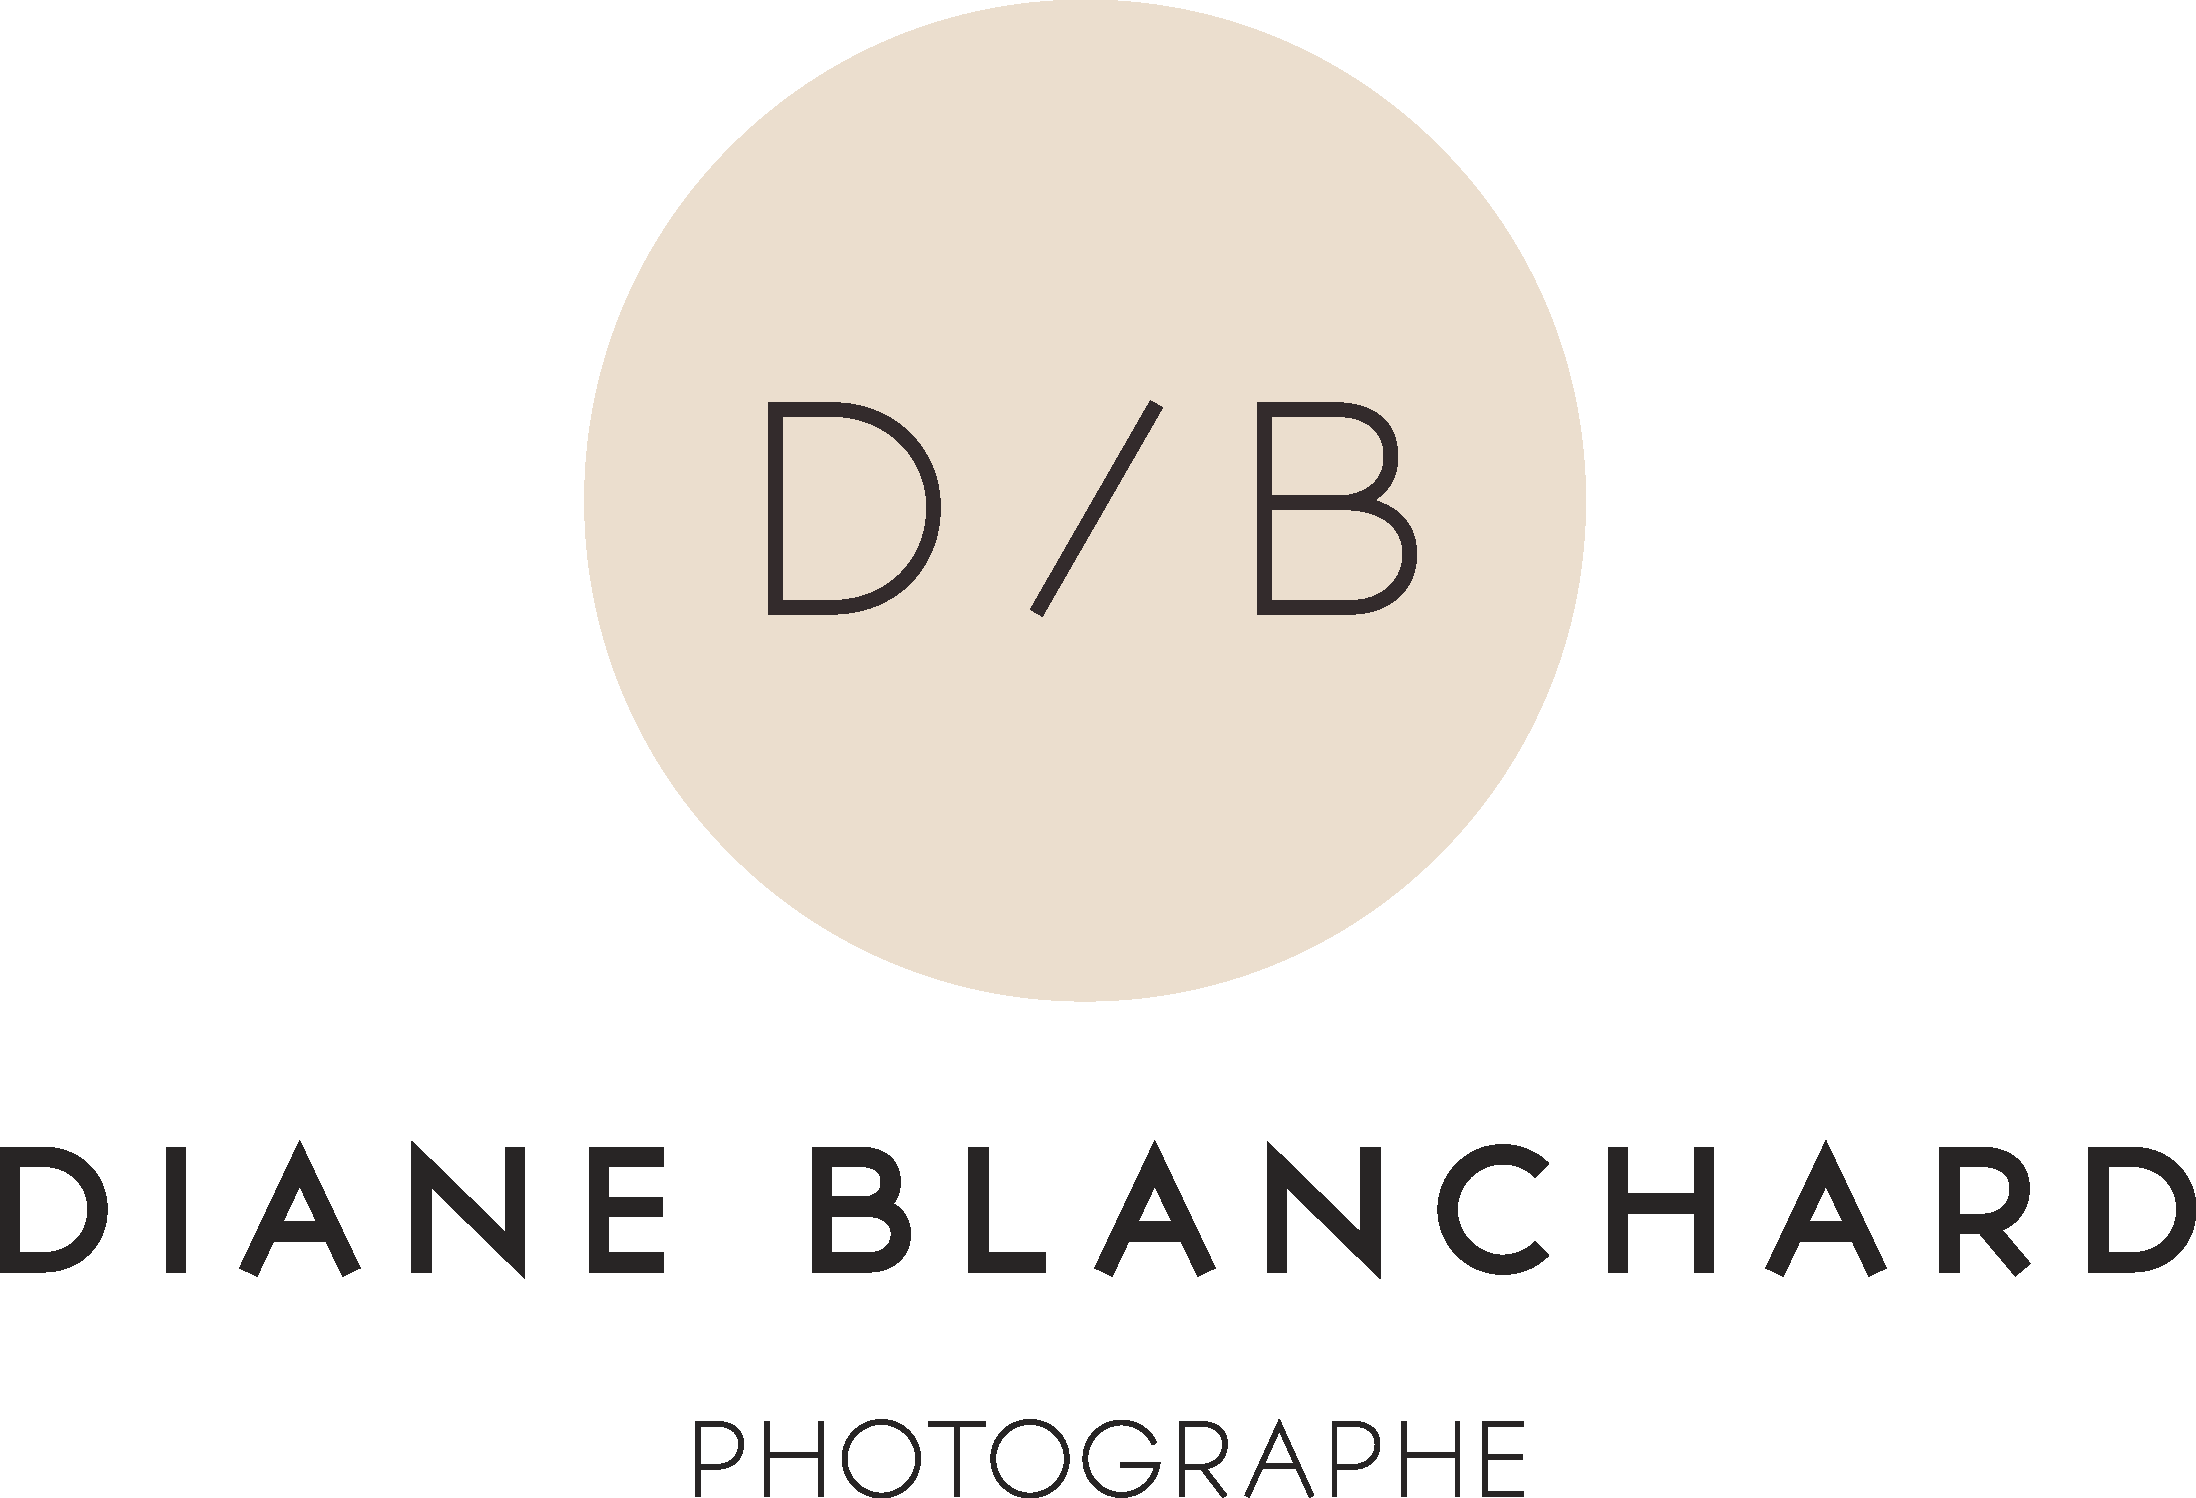 Diane Blanchard photographe